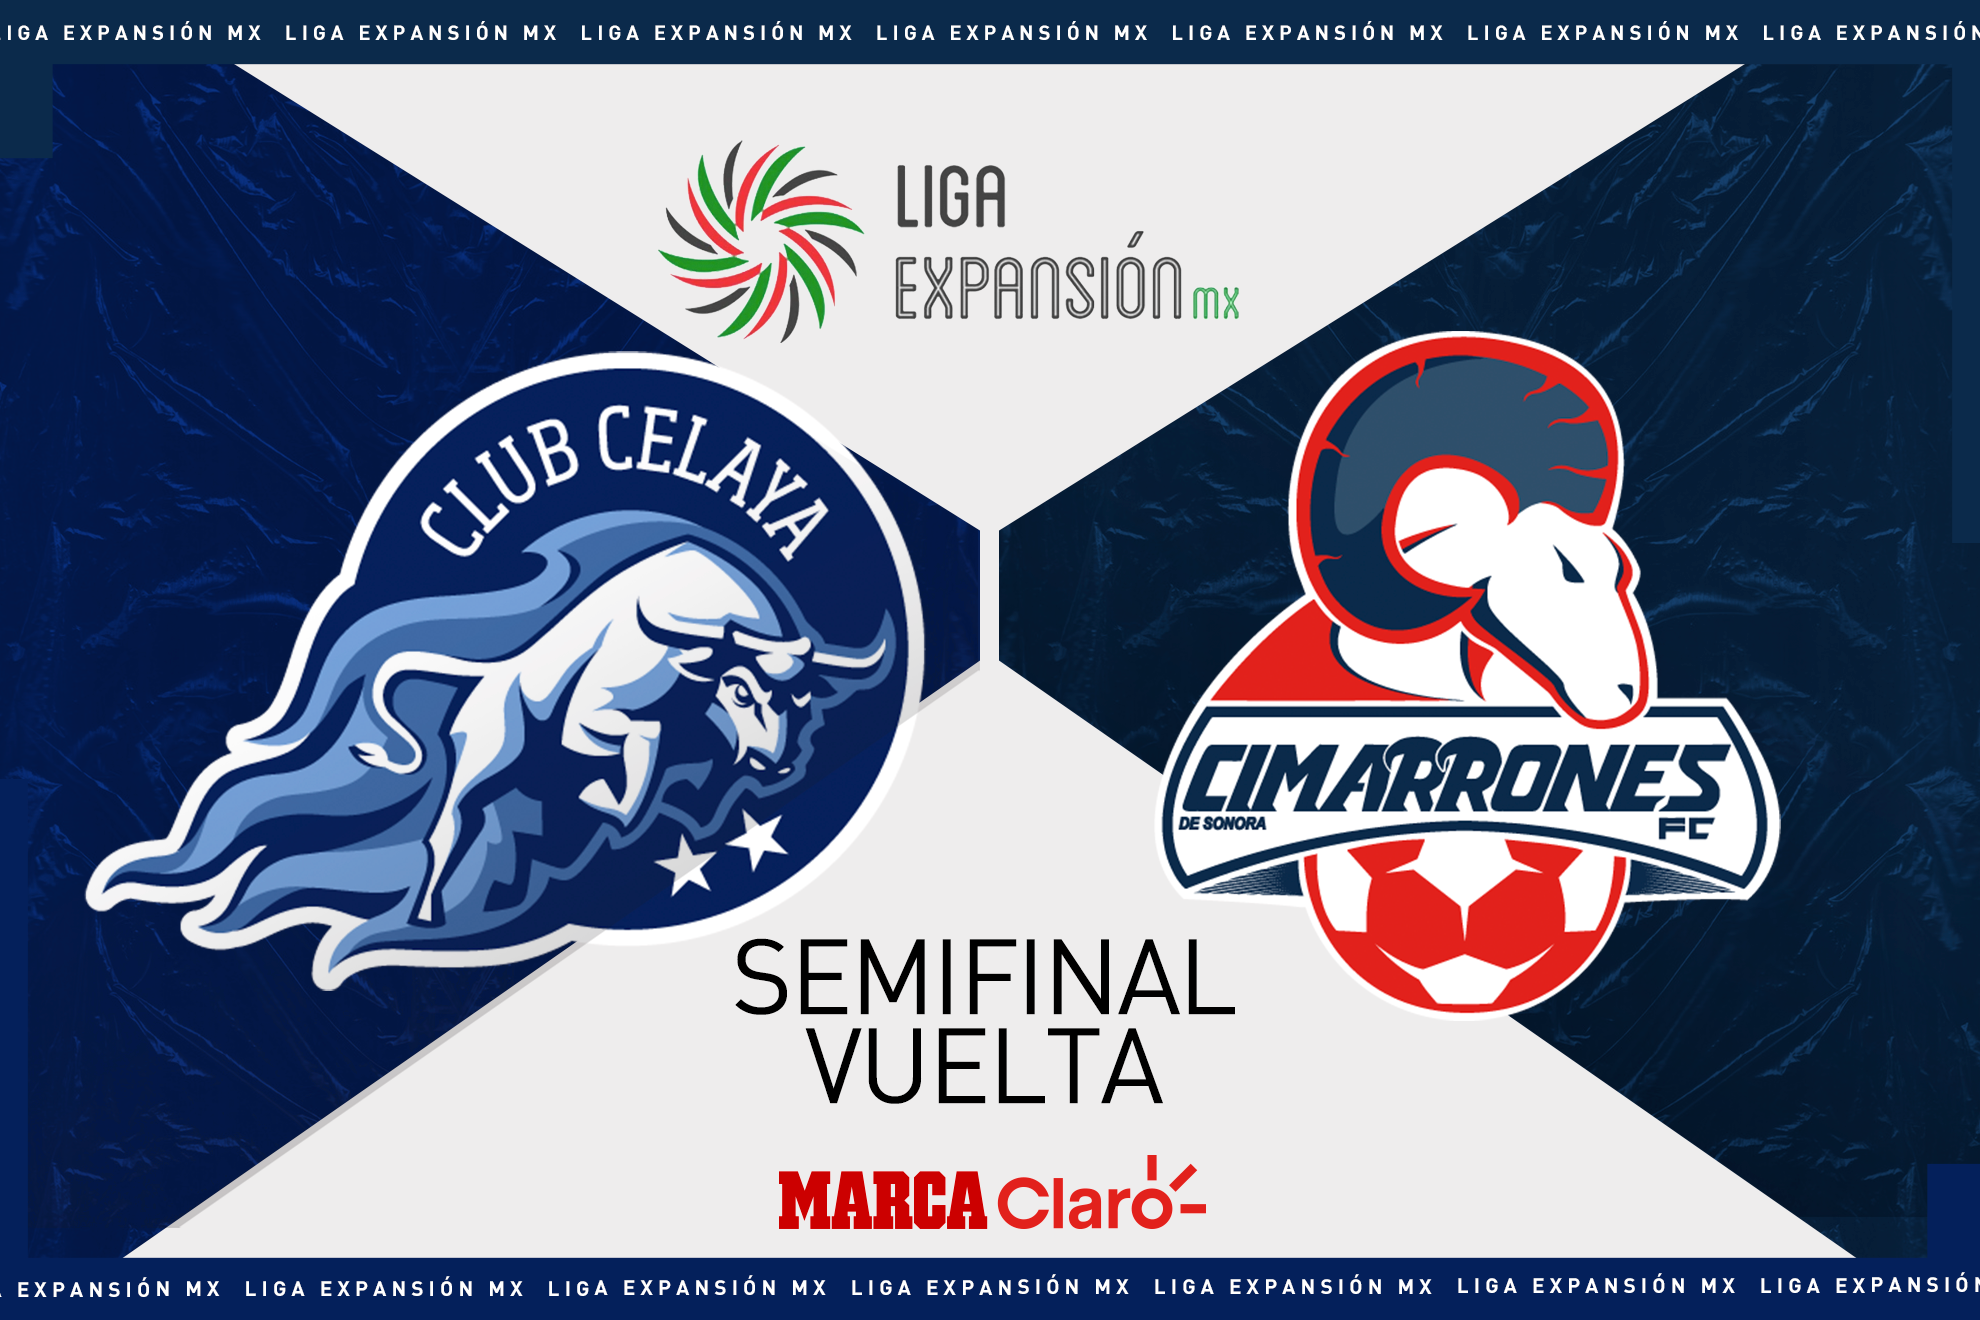 Celaya vs Cimarrones, en vivo la semifinal de la Liga Expansión MX